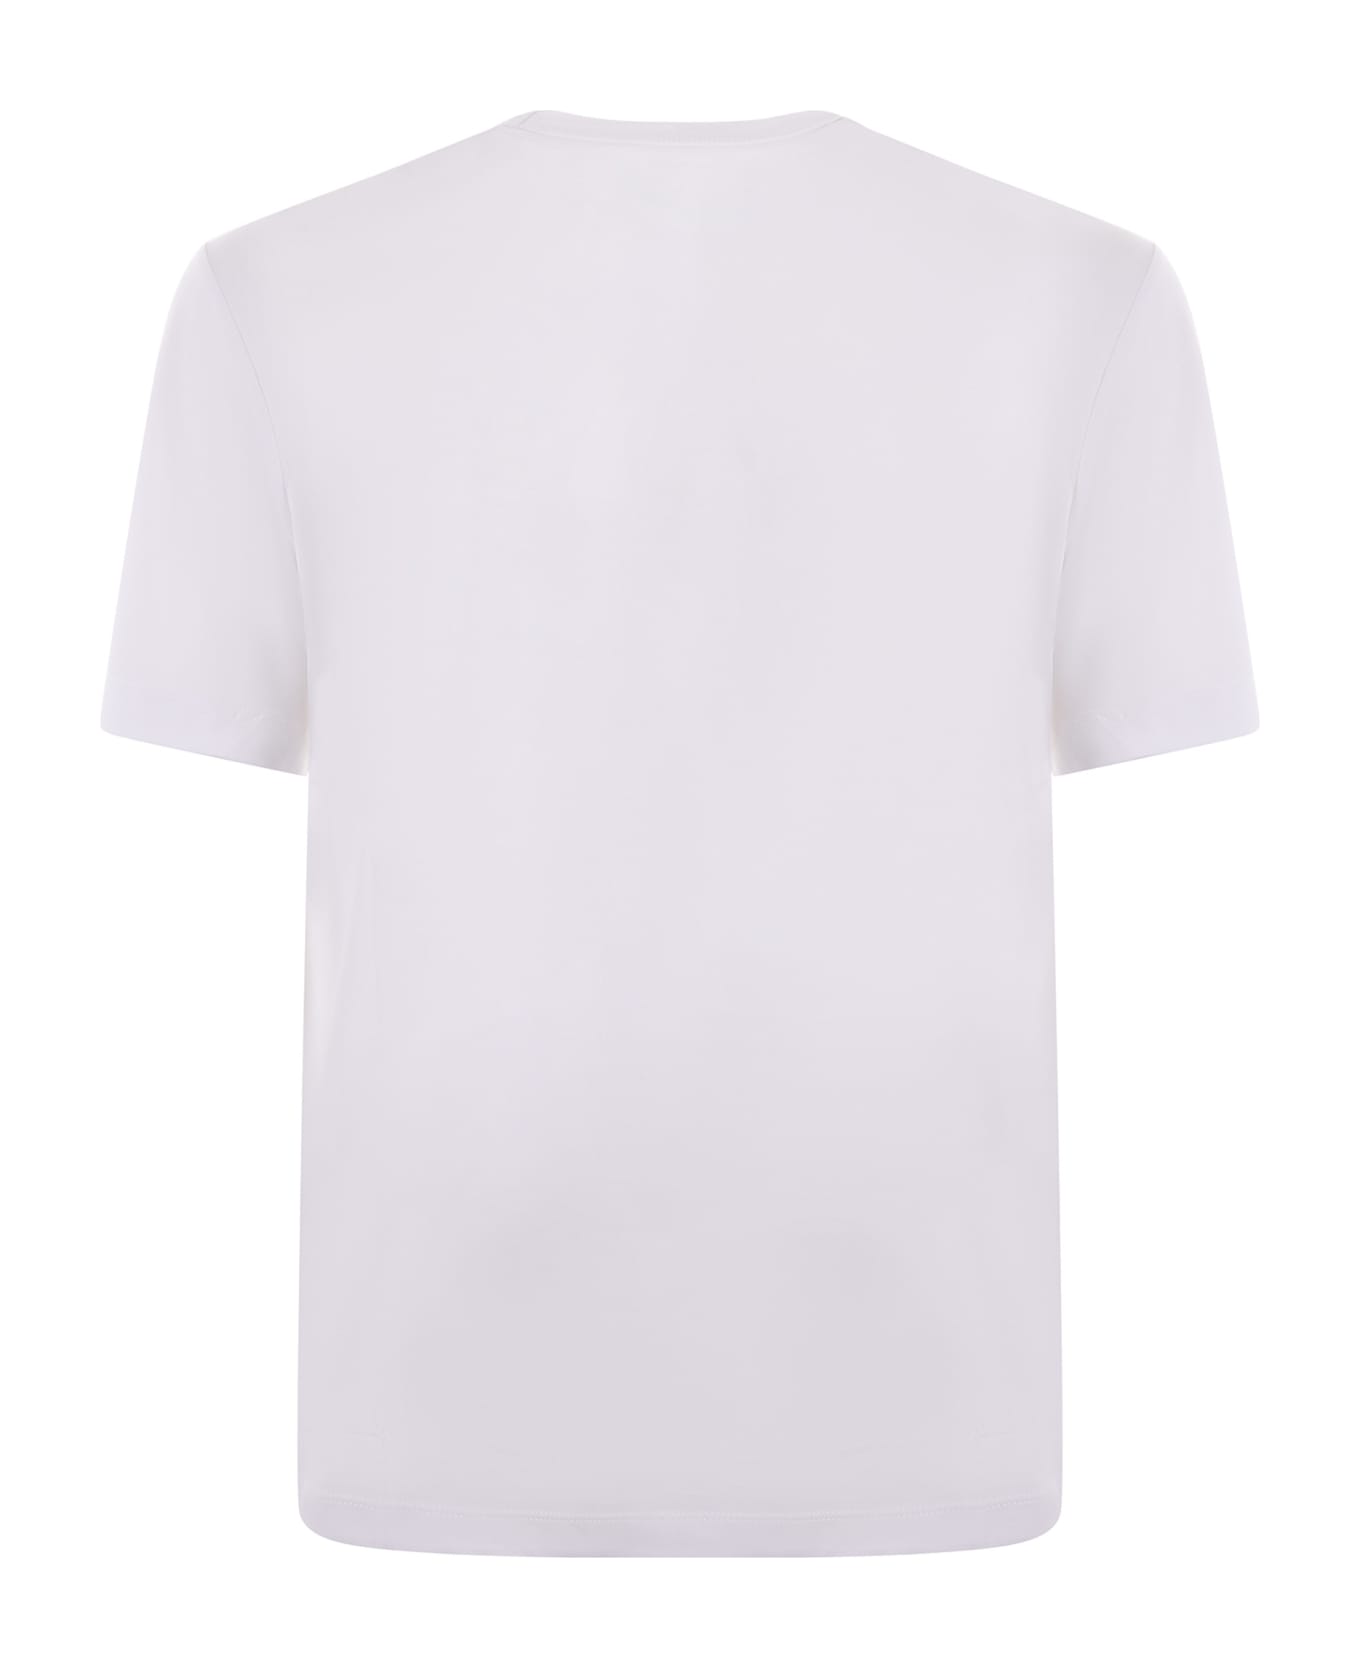 Blauer T-shirt - Bianco シャツ